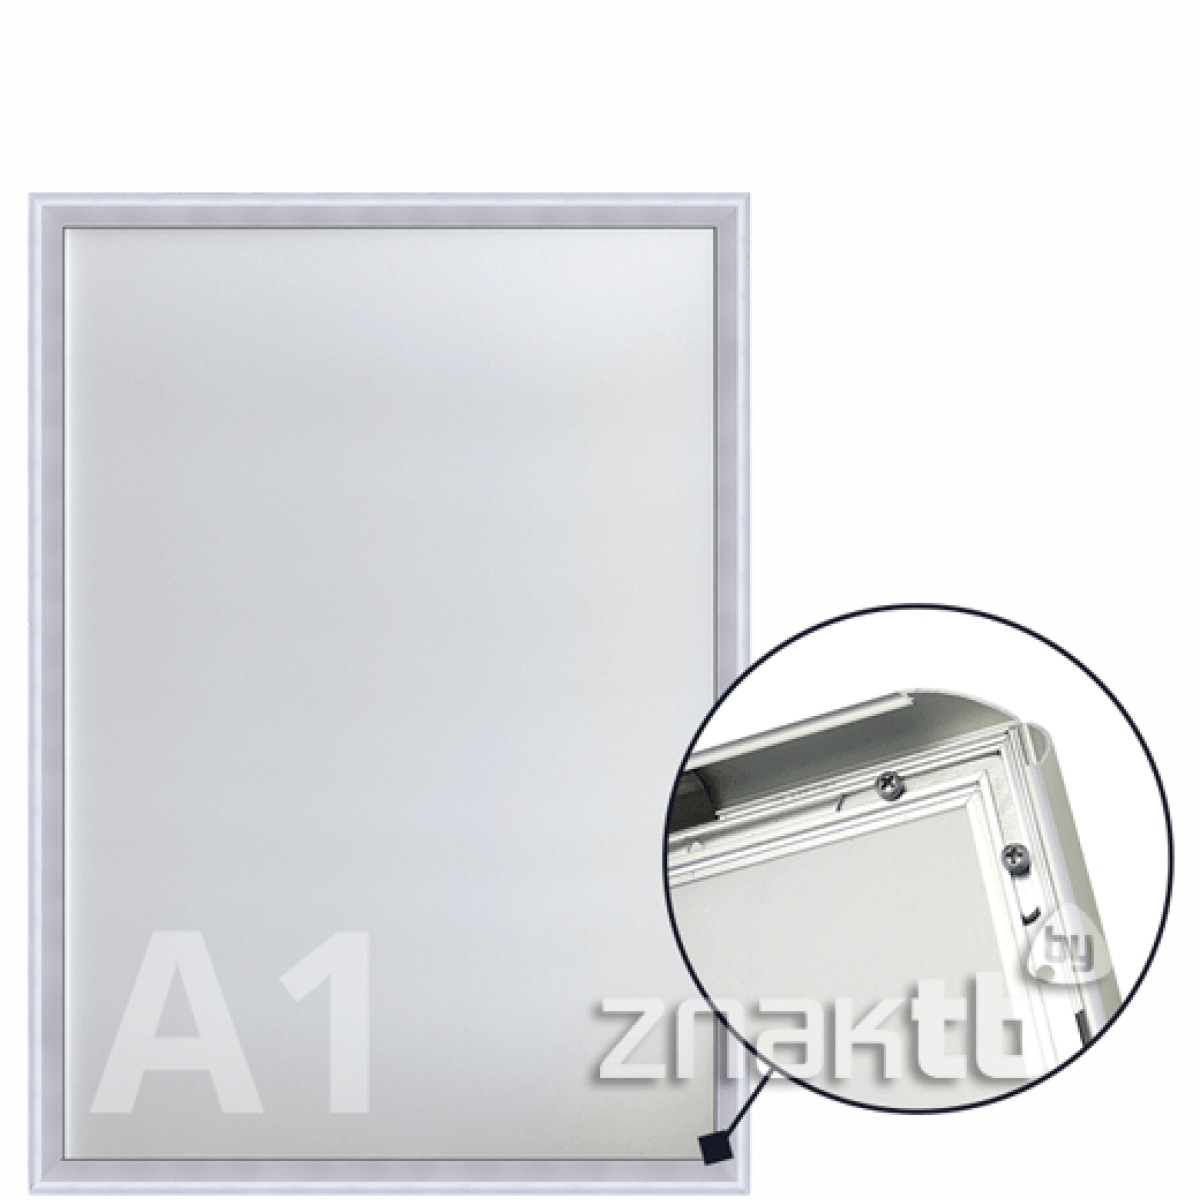 Клик-рамка алюминиевая формата А1